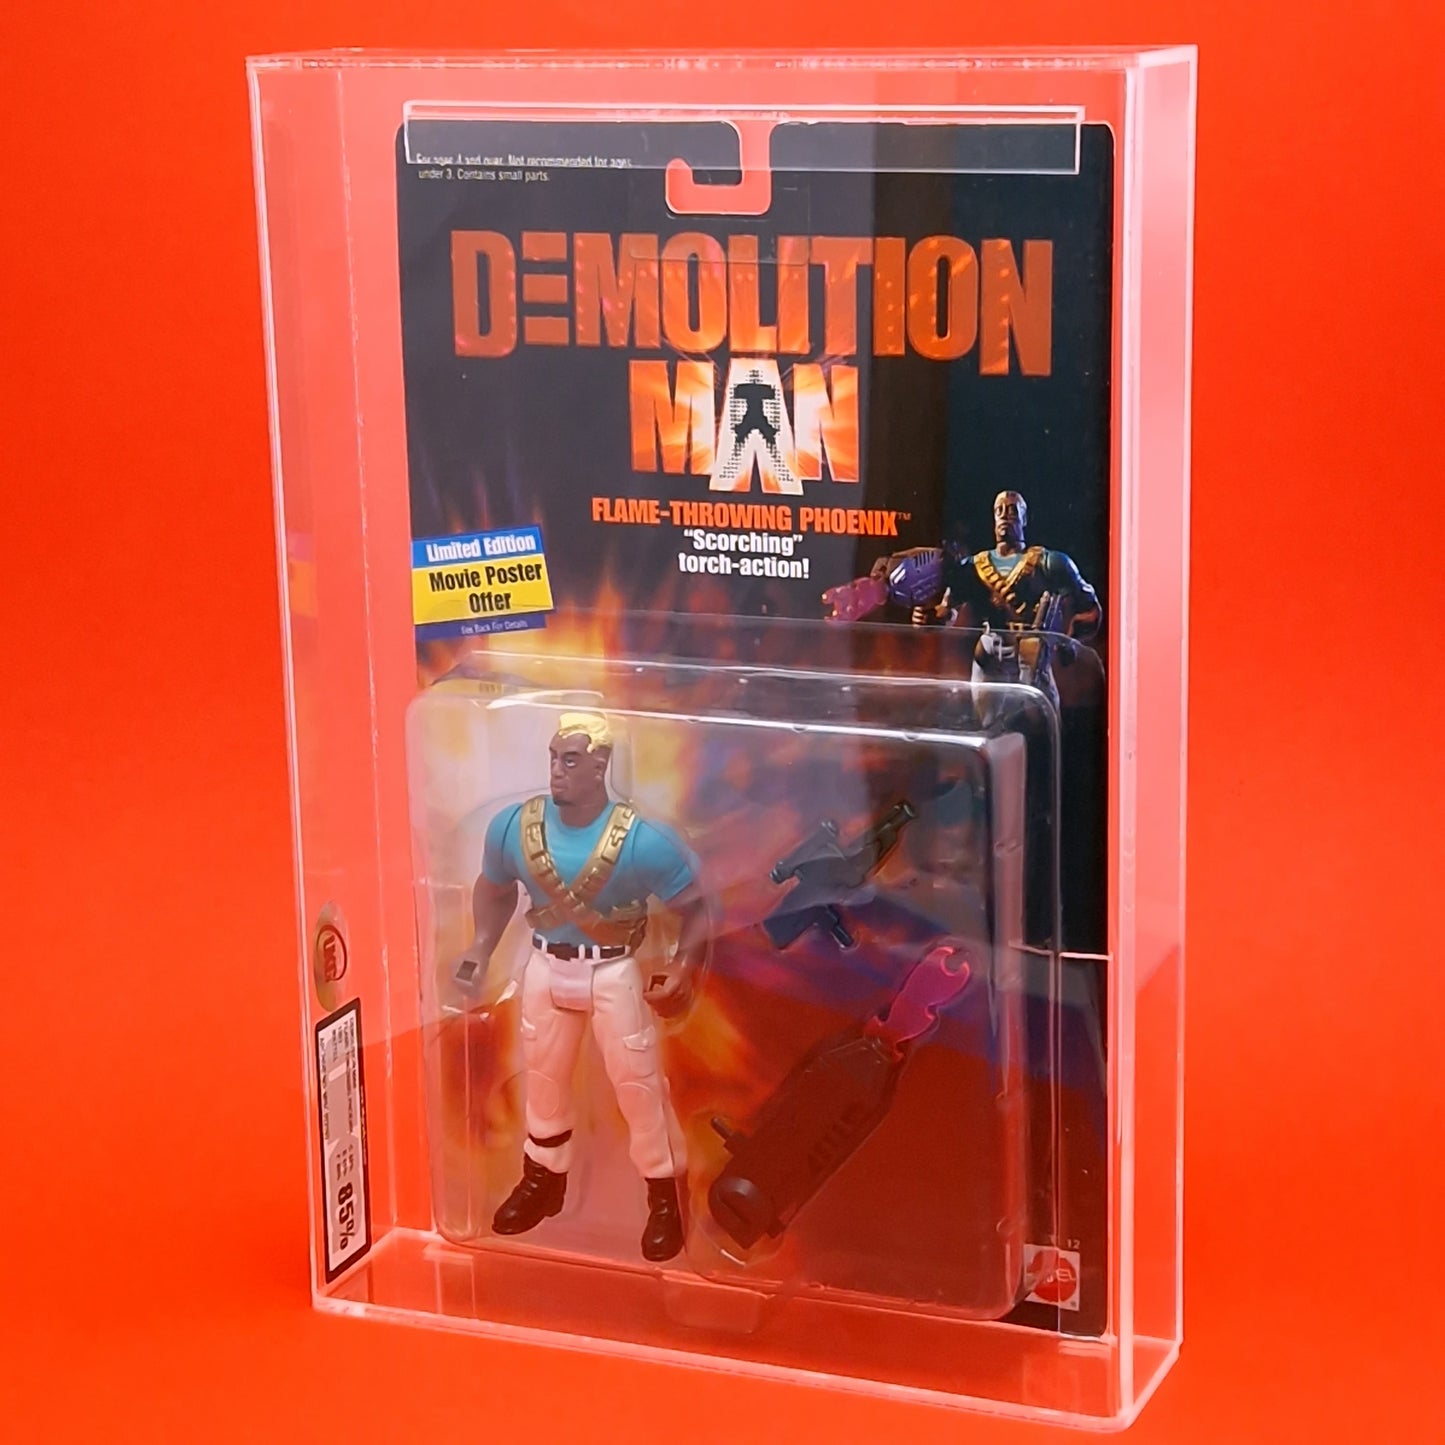 DEMOLITION MAN ☆ FLAME-THROWING SIMON PHOENIX Graded UKG 85% Vintage Action Figure ☆ MOC Carded Sealed